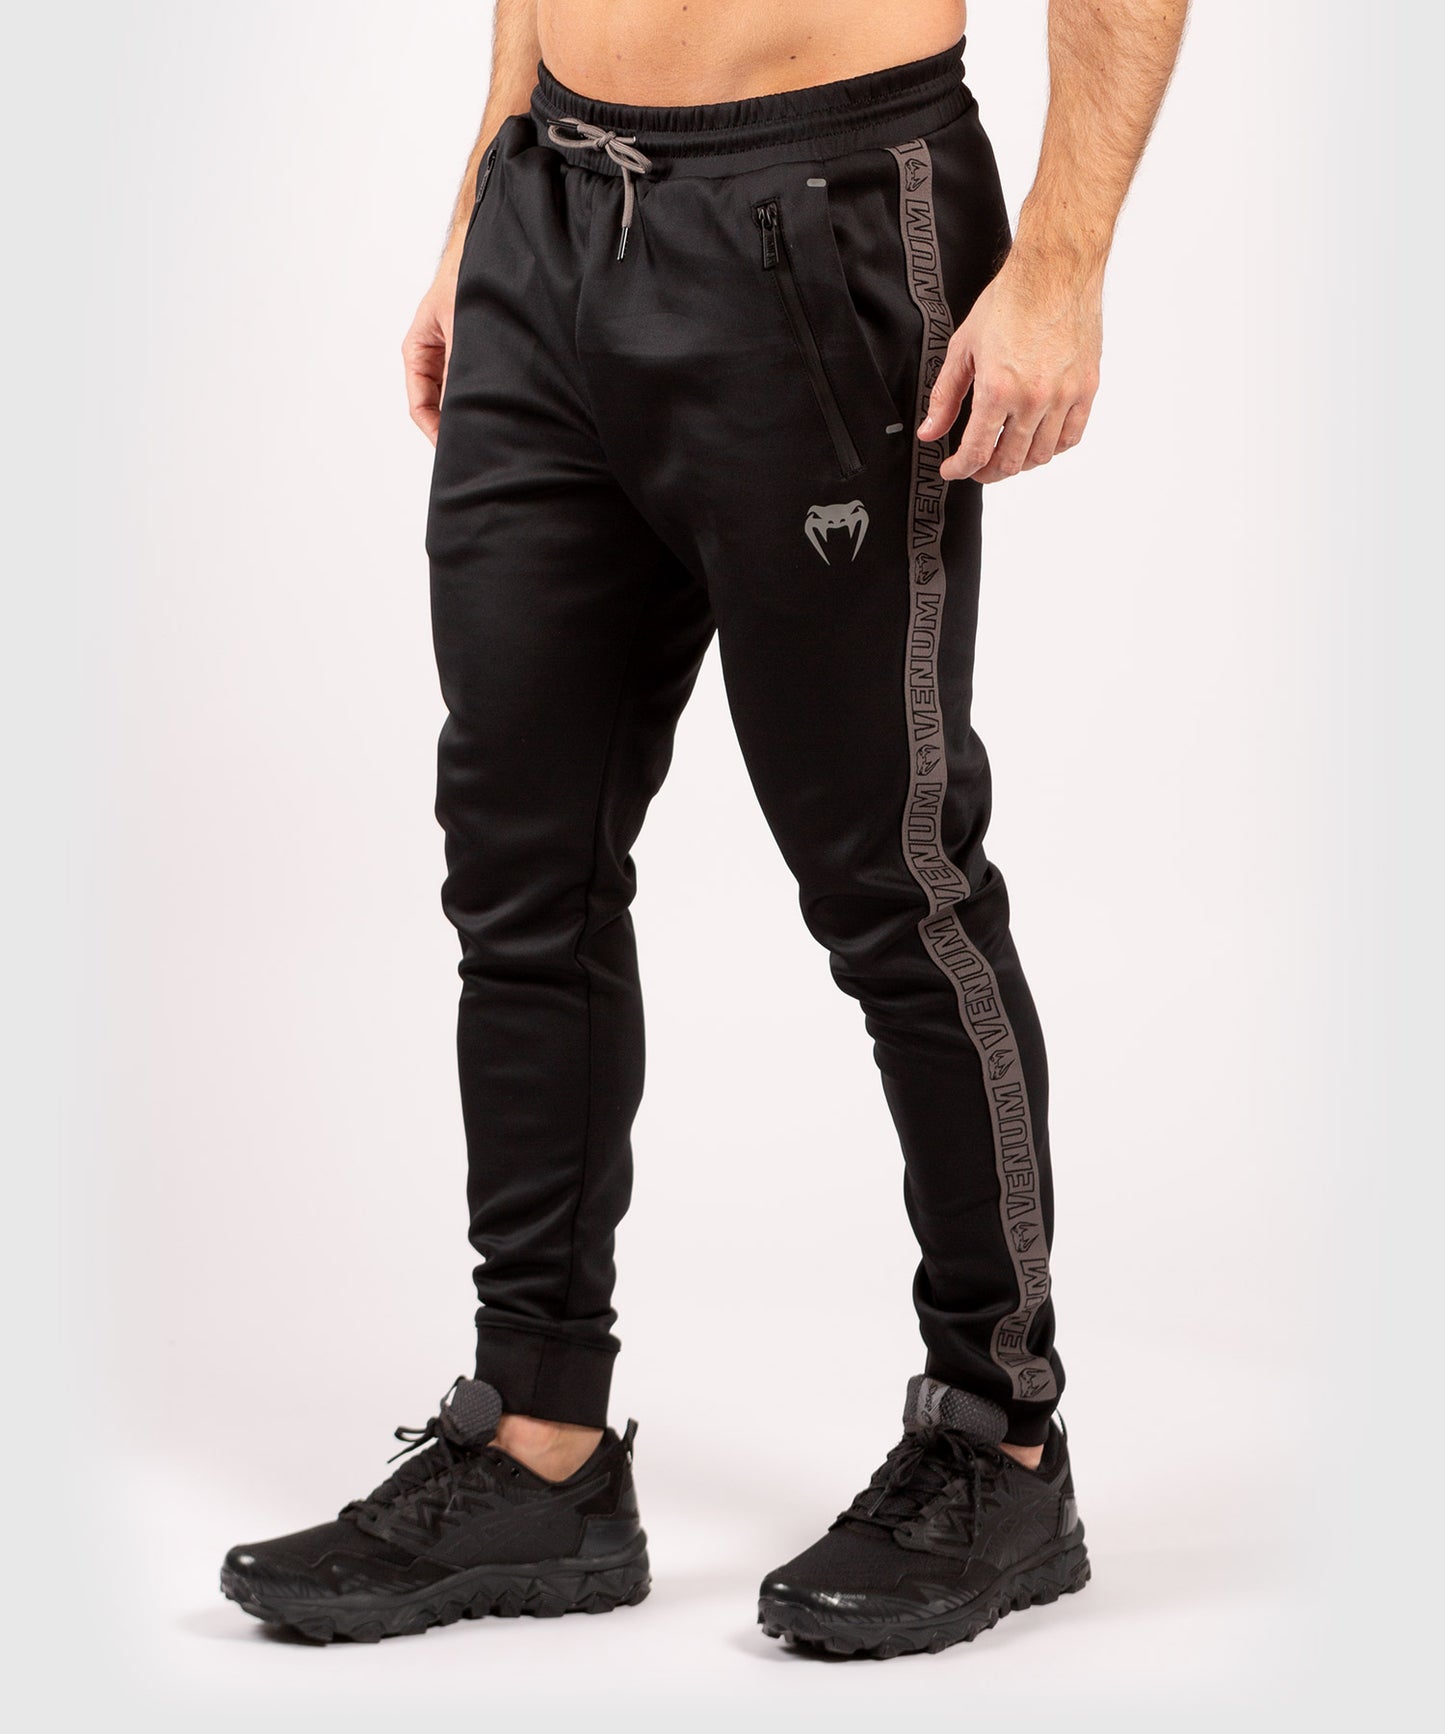 Pantalones de chándal Venum Laser ZX negro / gris > Envío Gratis